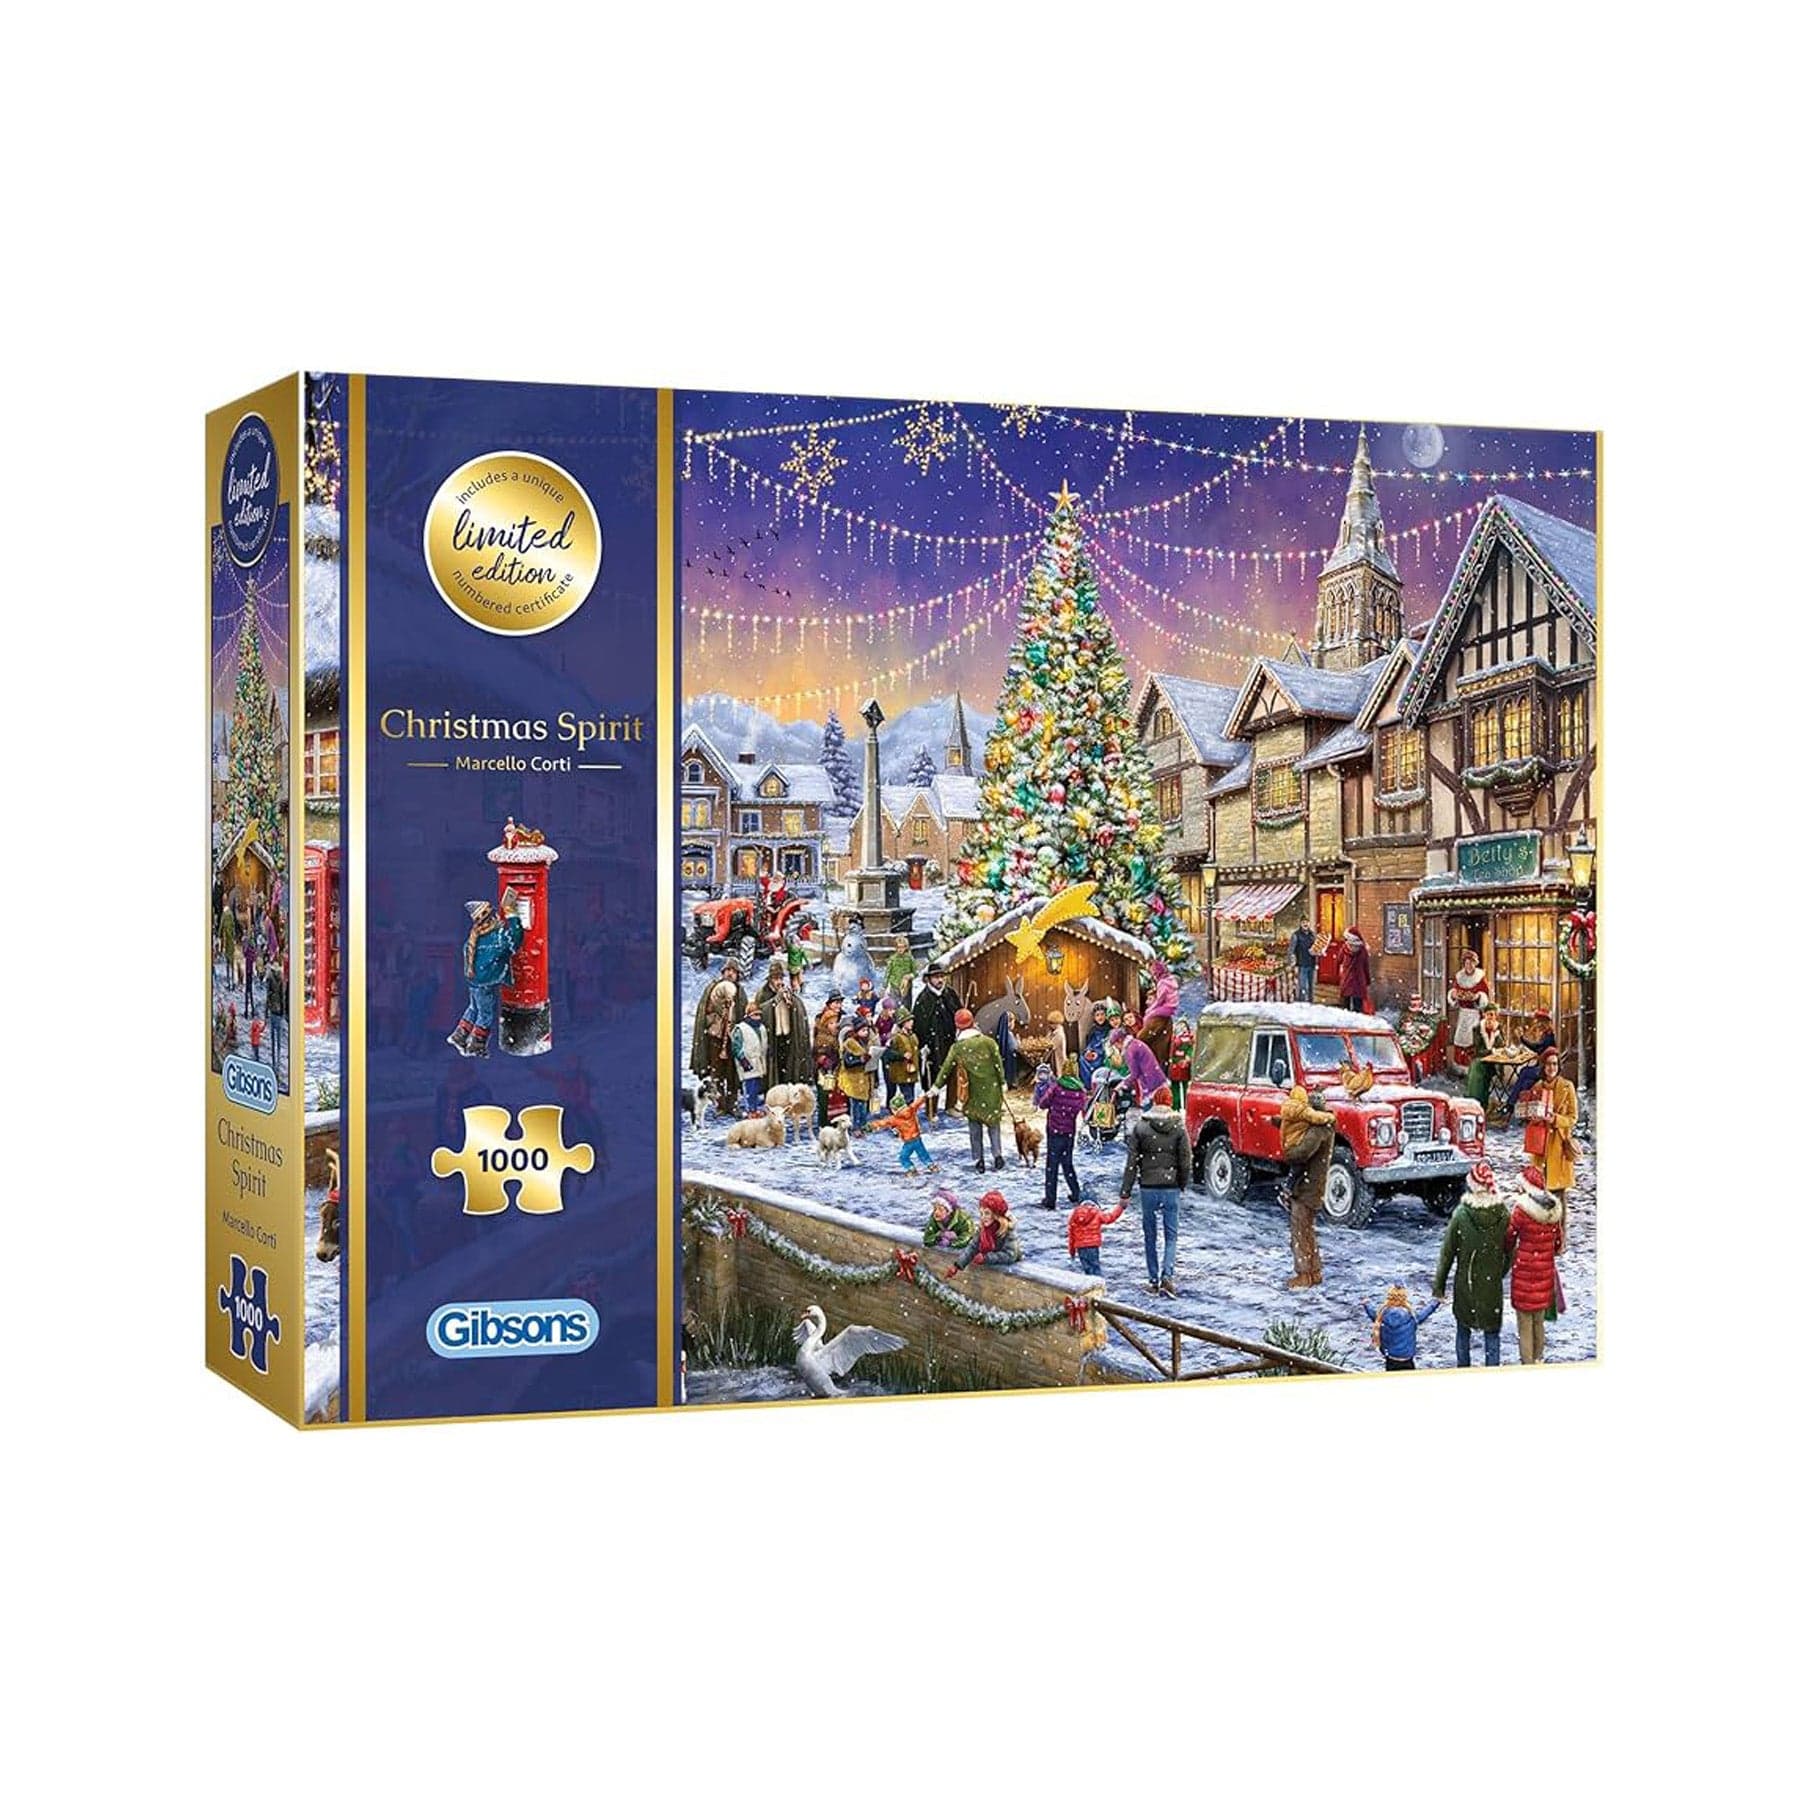 Christmas spirit 1000 piece jigsaw puzzle